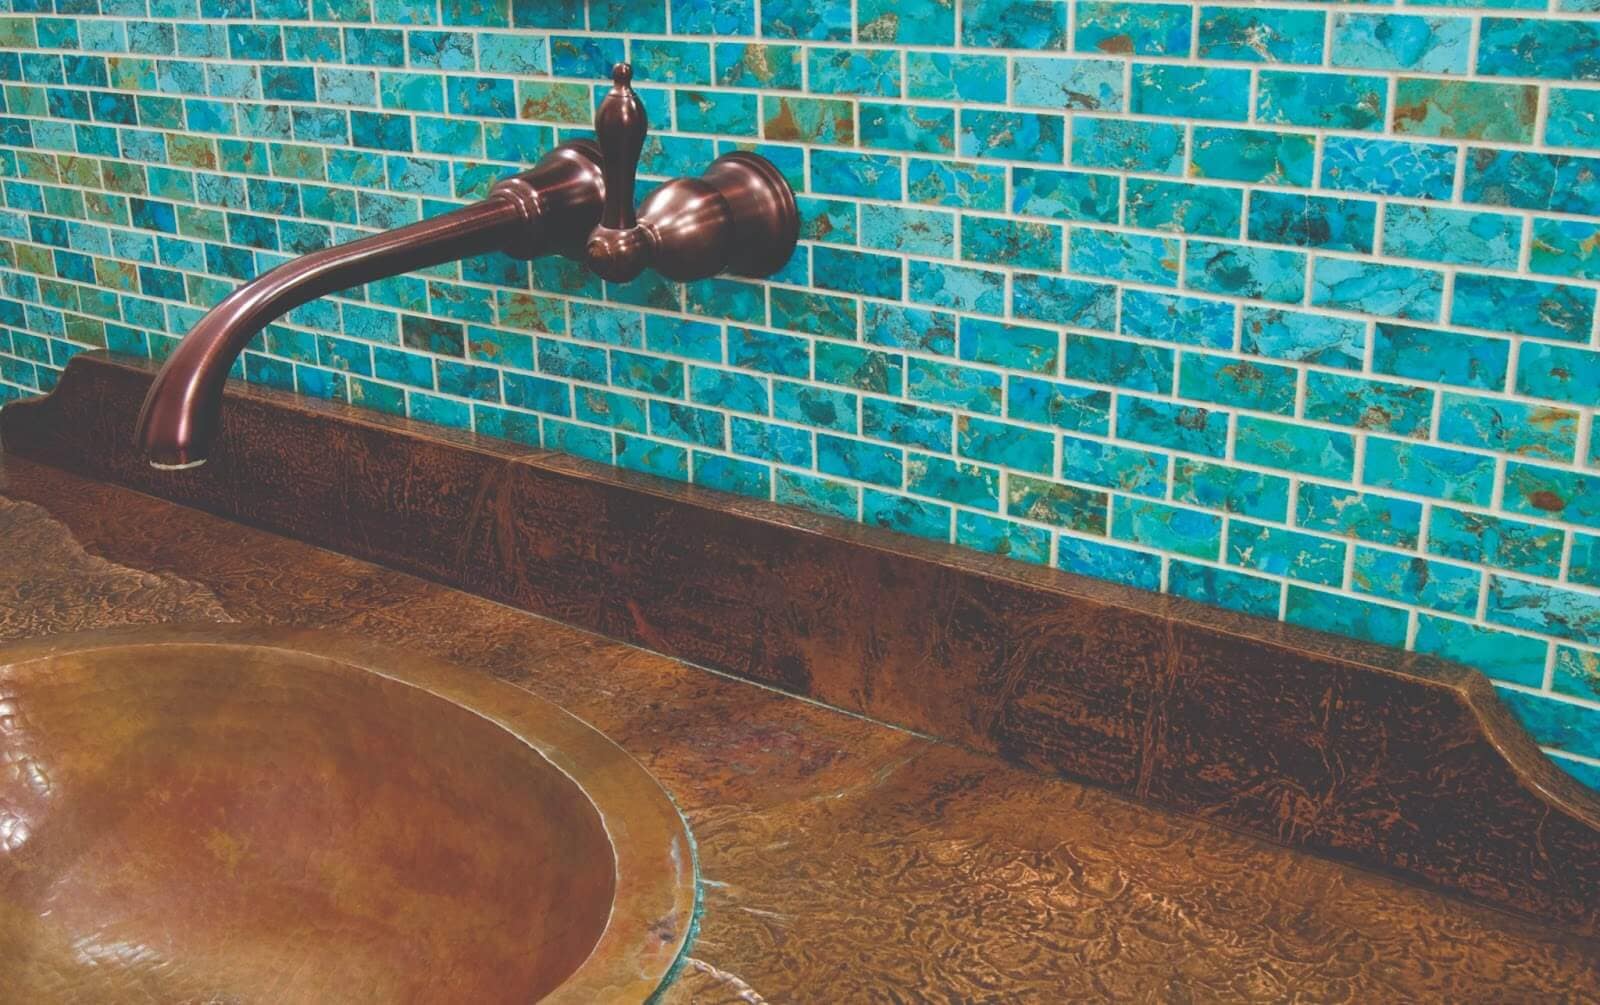 Turquoise subway tile bathroom backsplash in a natural look